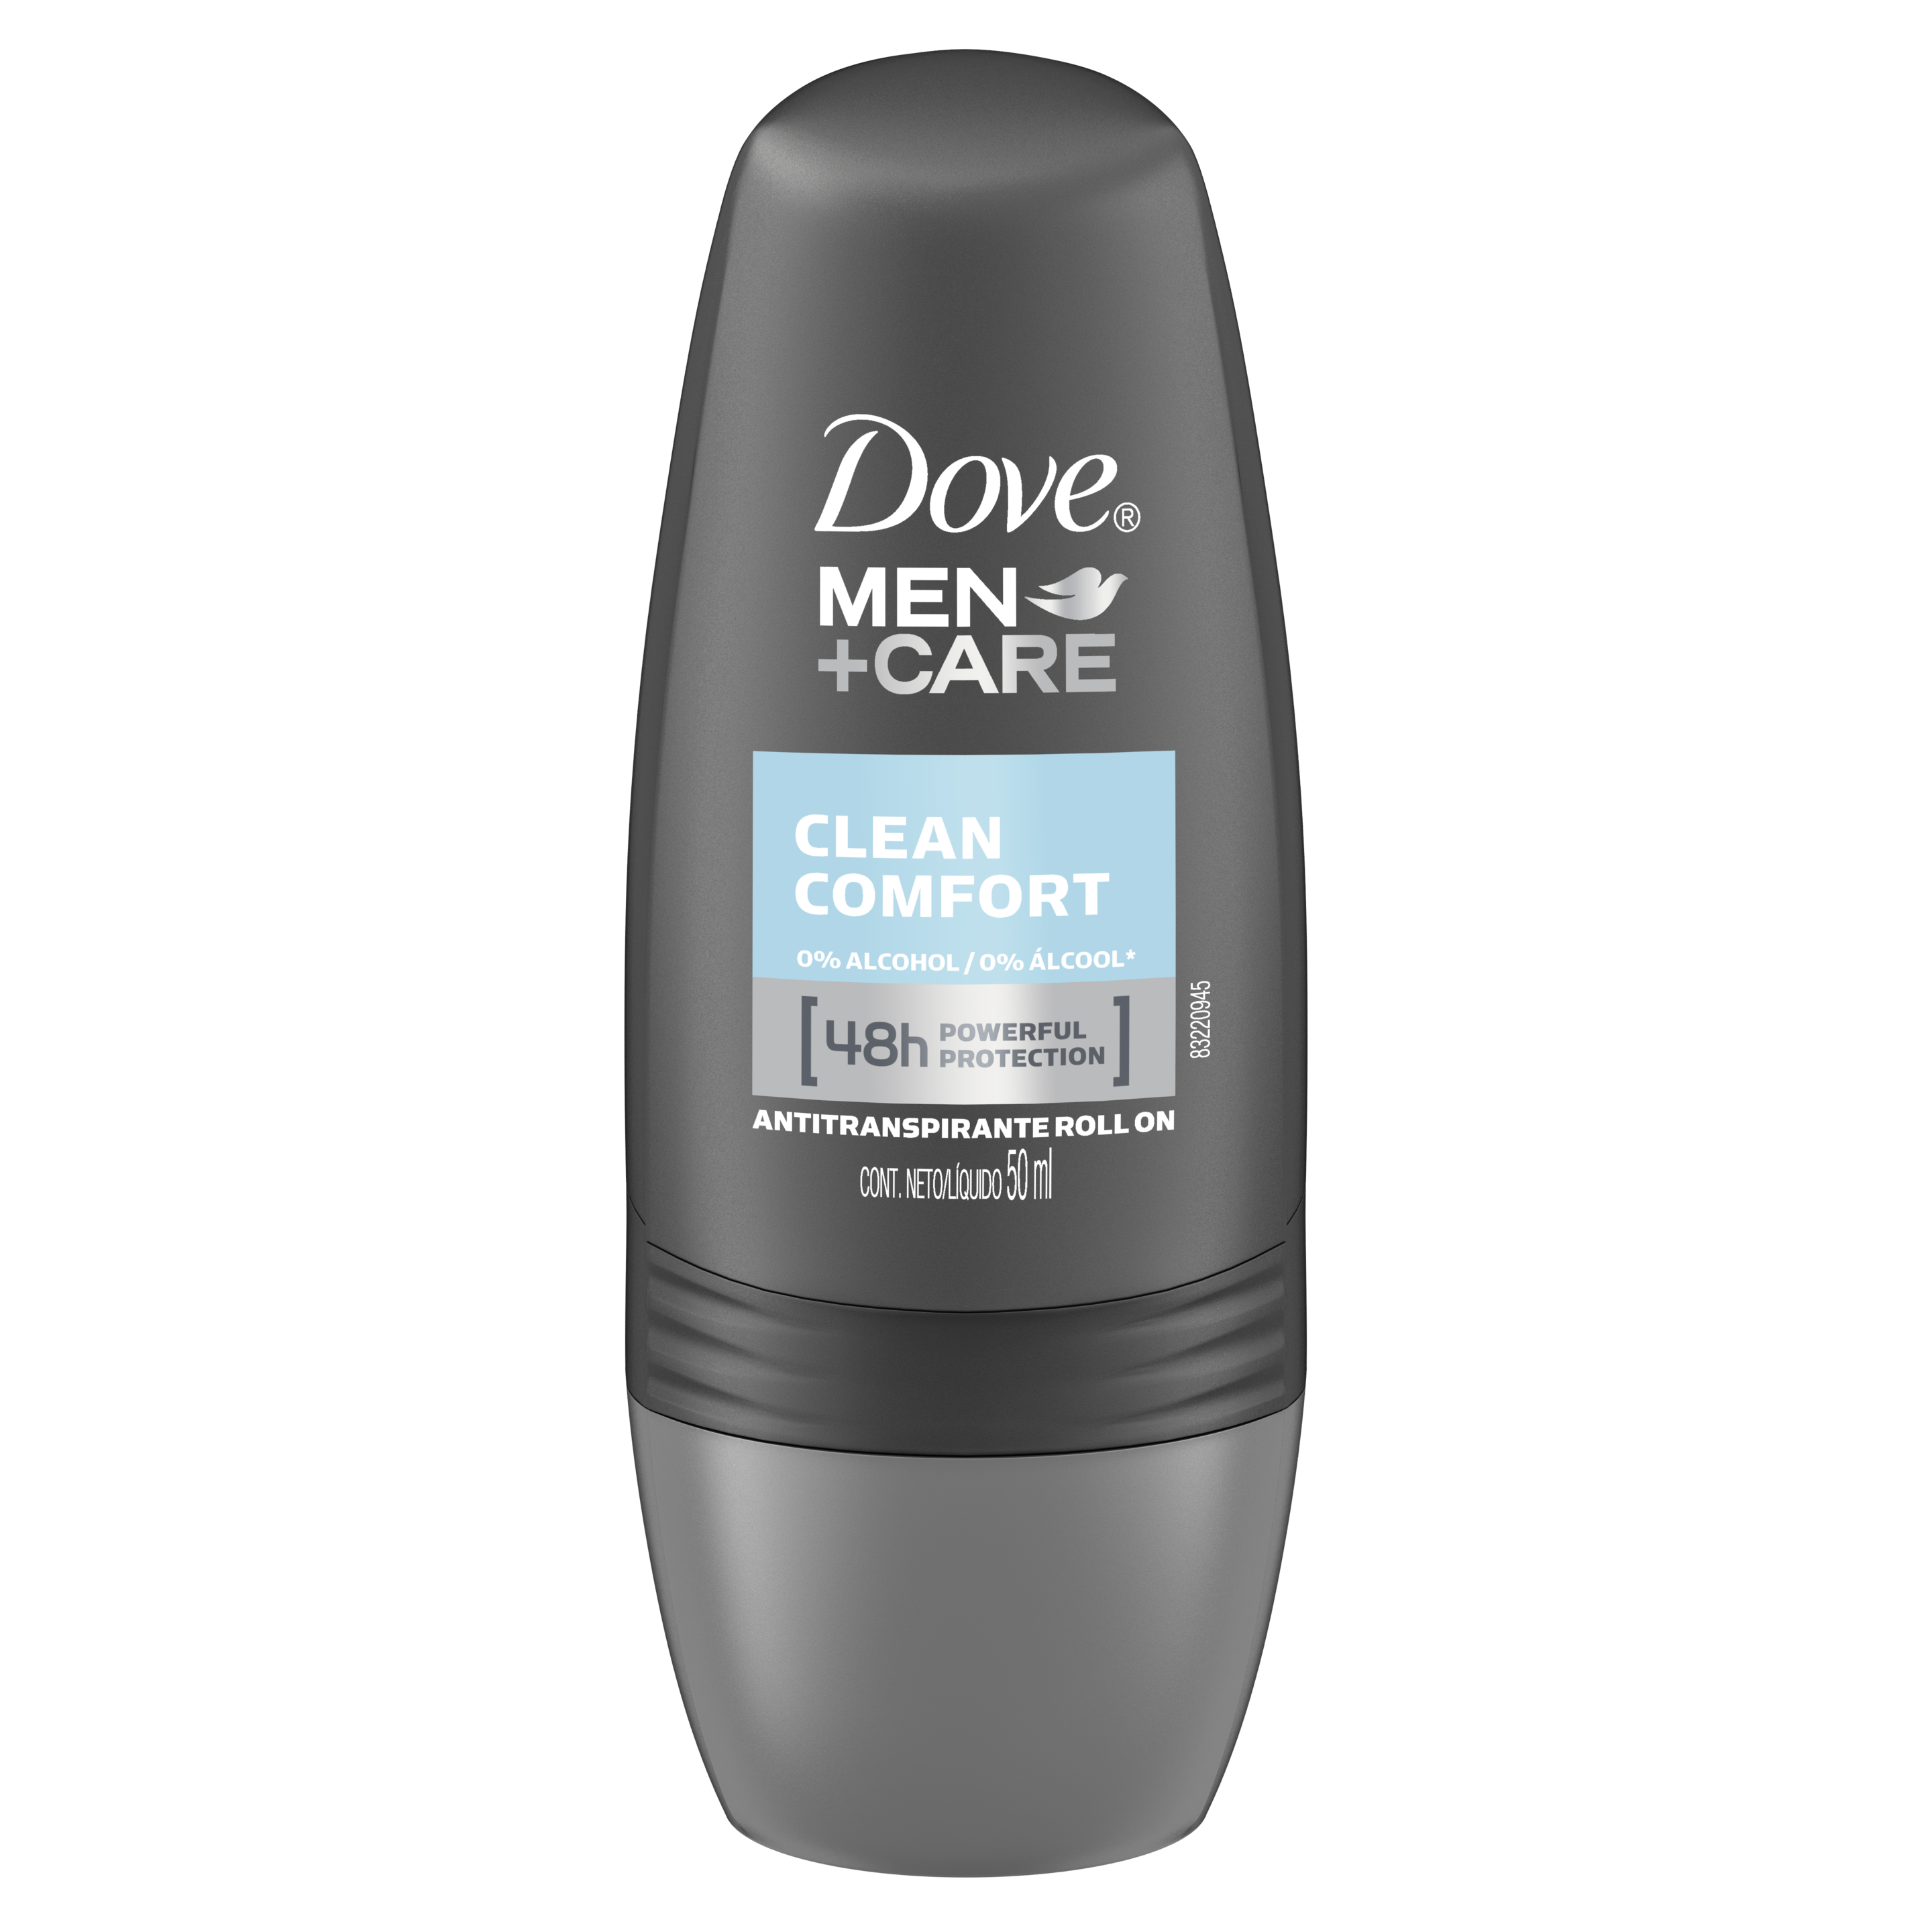 Dove Men+Care Antitranspirante en Roll-On Clean Comfort 50g